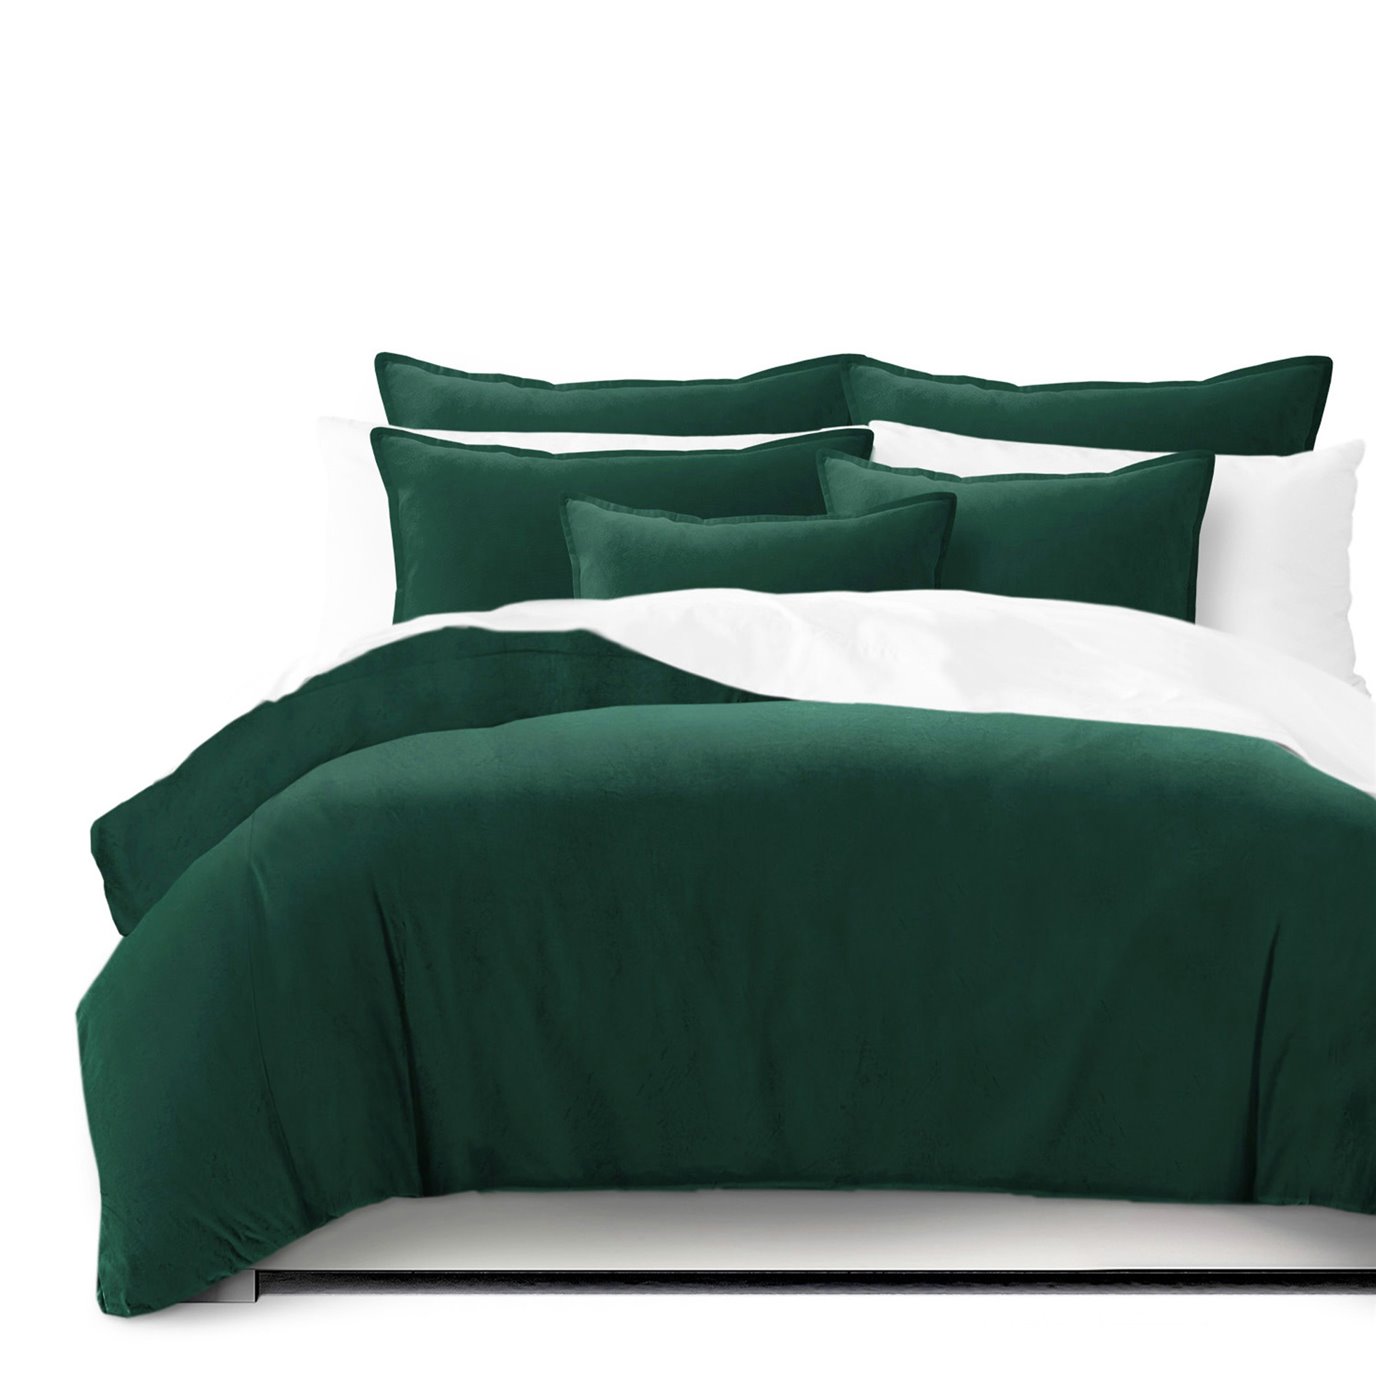 Vanessa Emerald Coverlet and Pillow Sham(s) Set - Size Queen